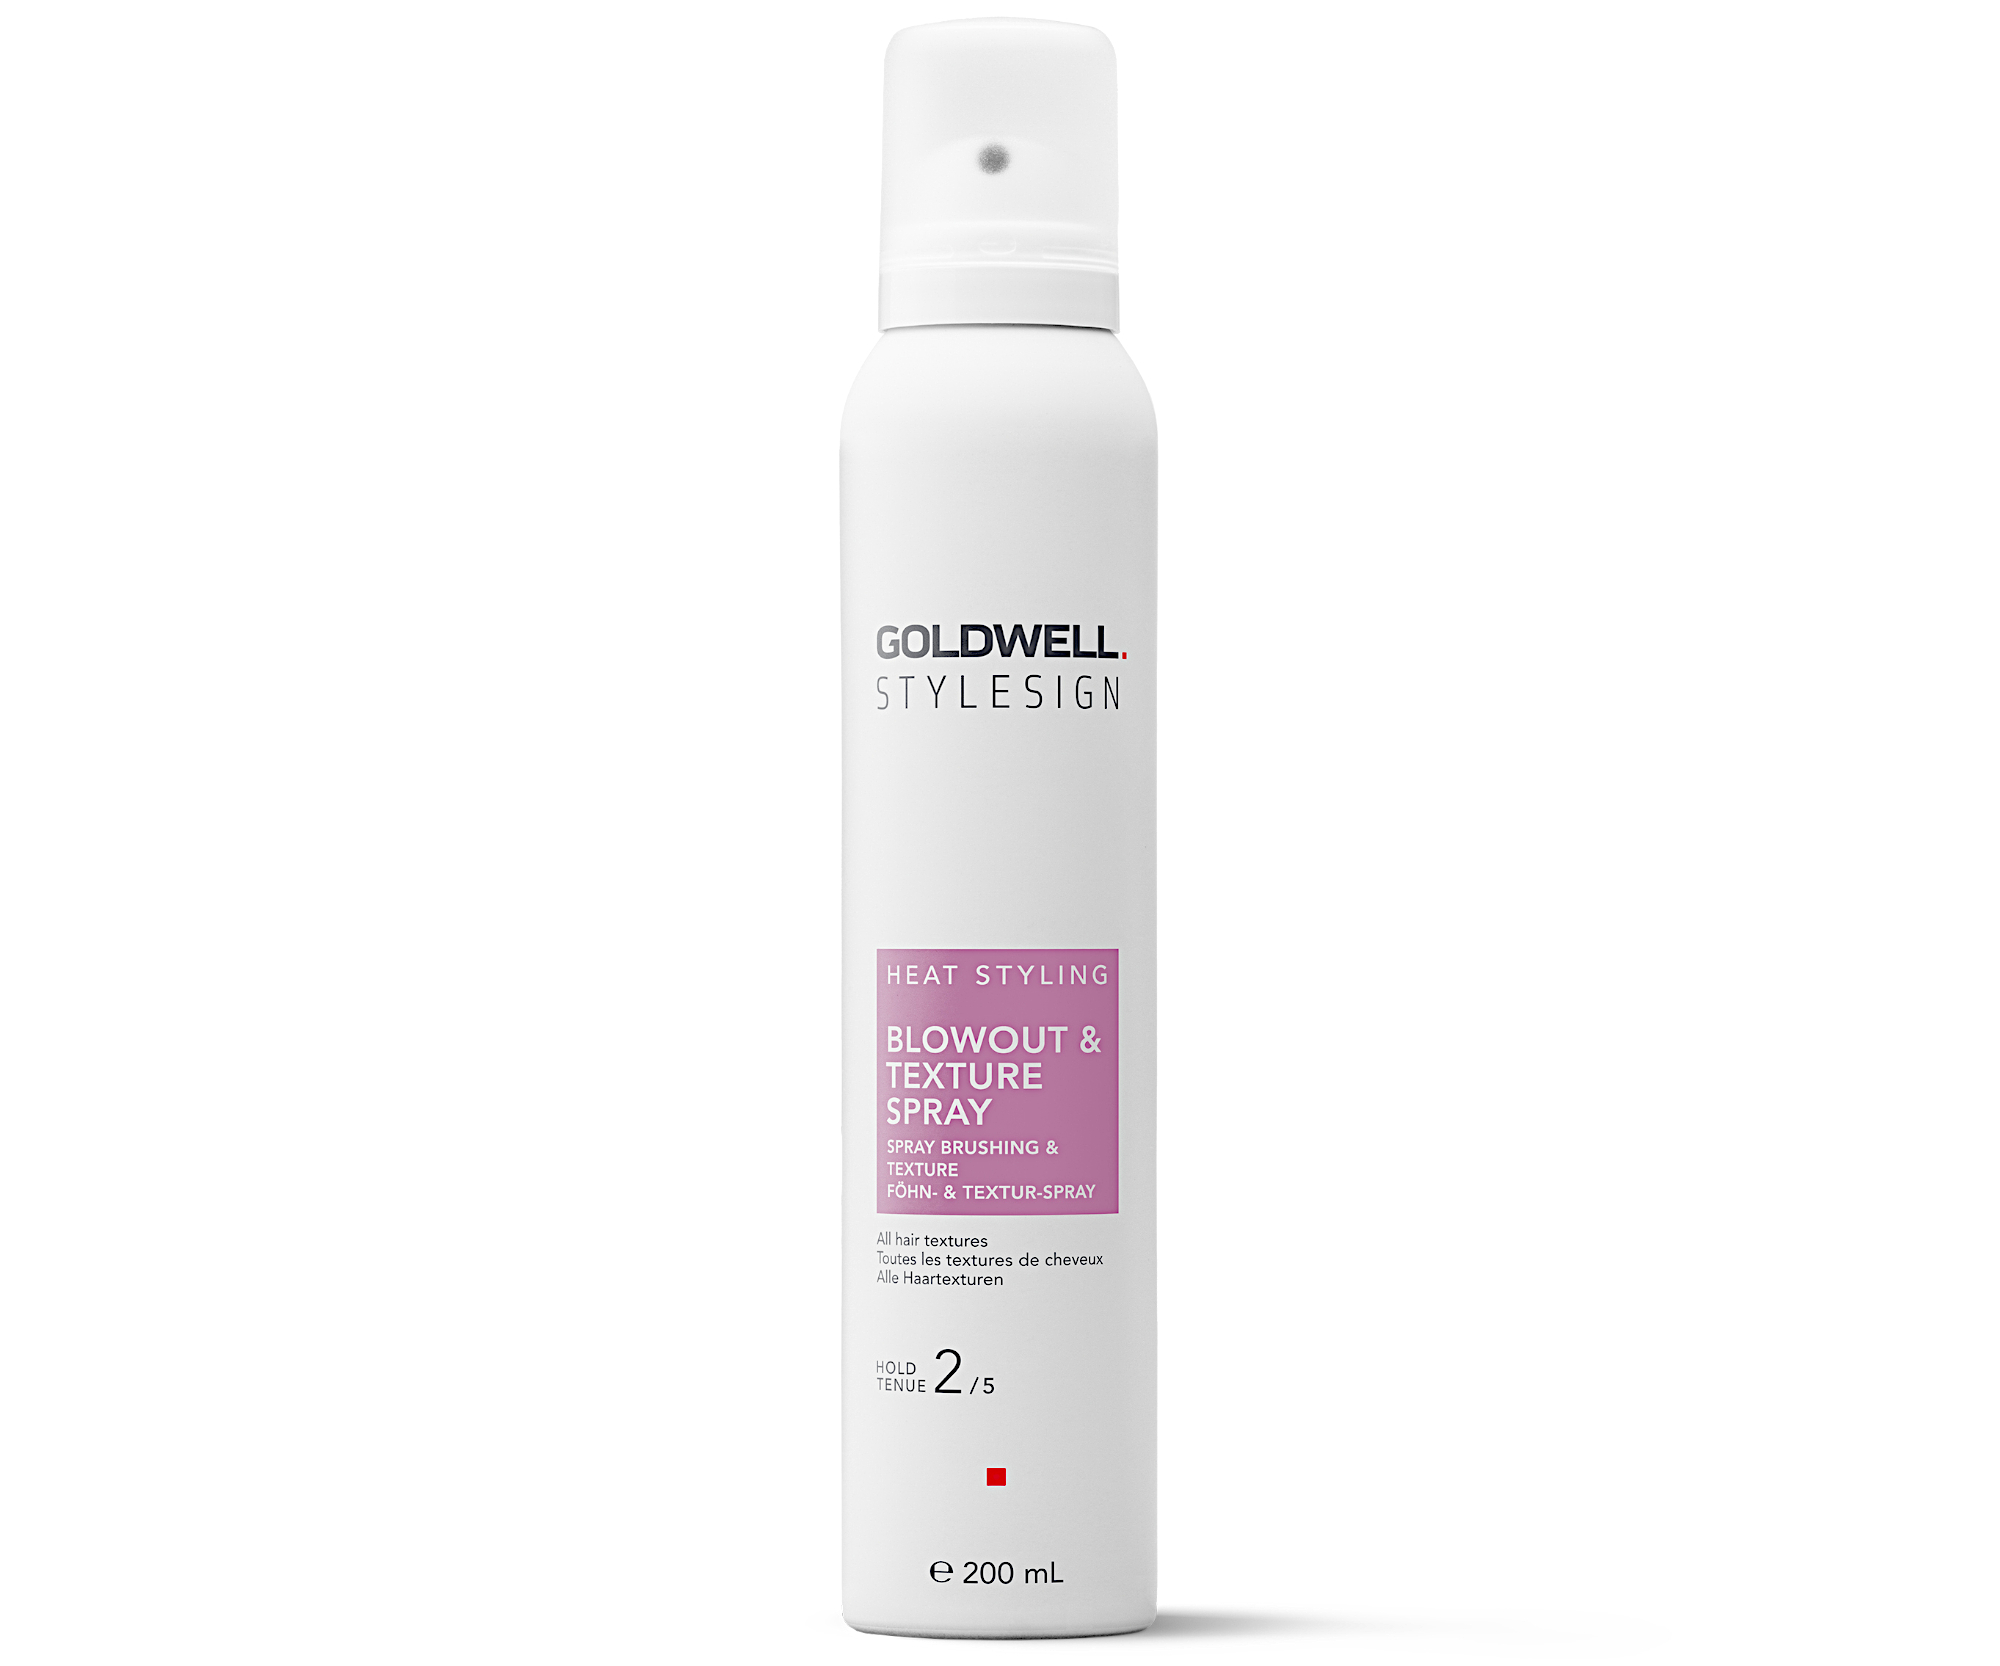 Sprej pro finální objem a texturu vlasů Goldwell Stylesign Blowout and Texture Spray - 200 ml + dárek zdarma